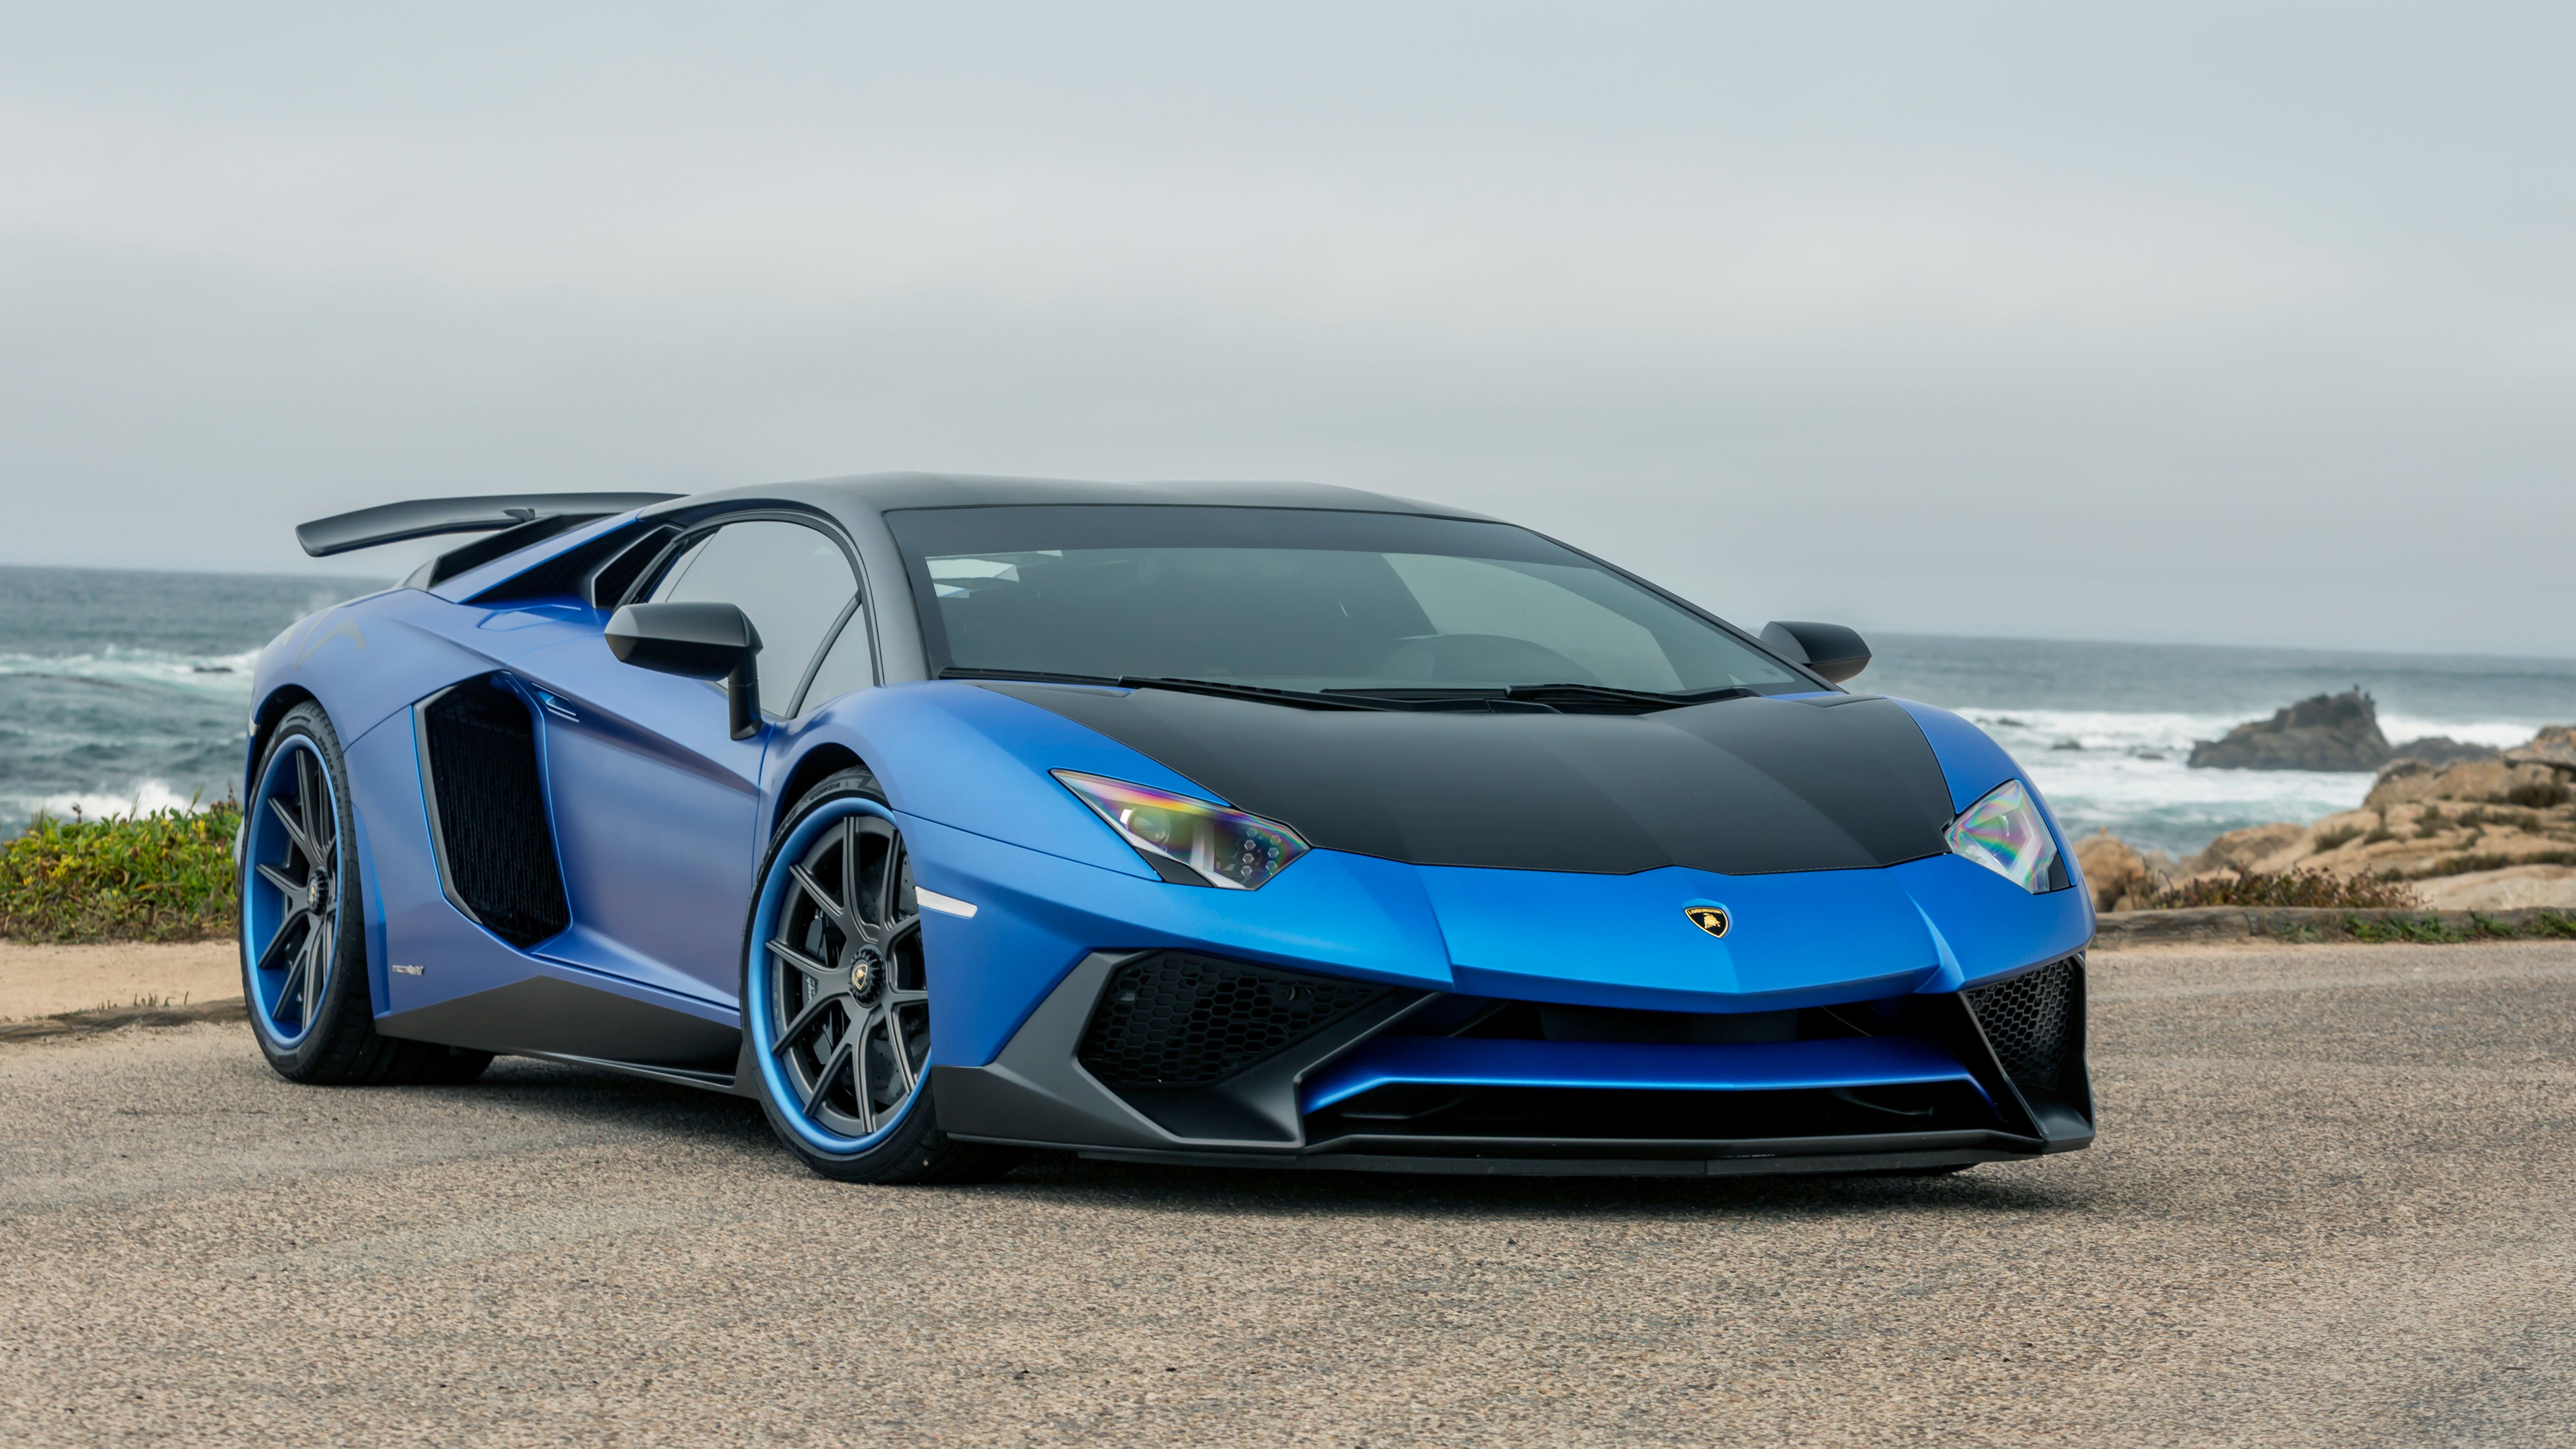 Blue Lamborghini Wallpaper 1080p. Vehicles Wallpaper